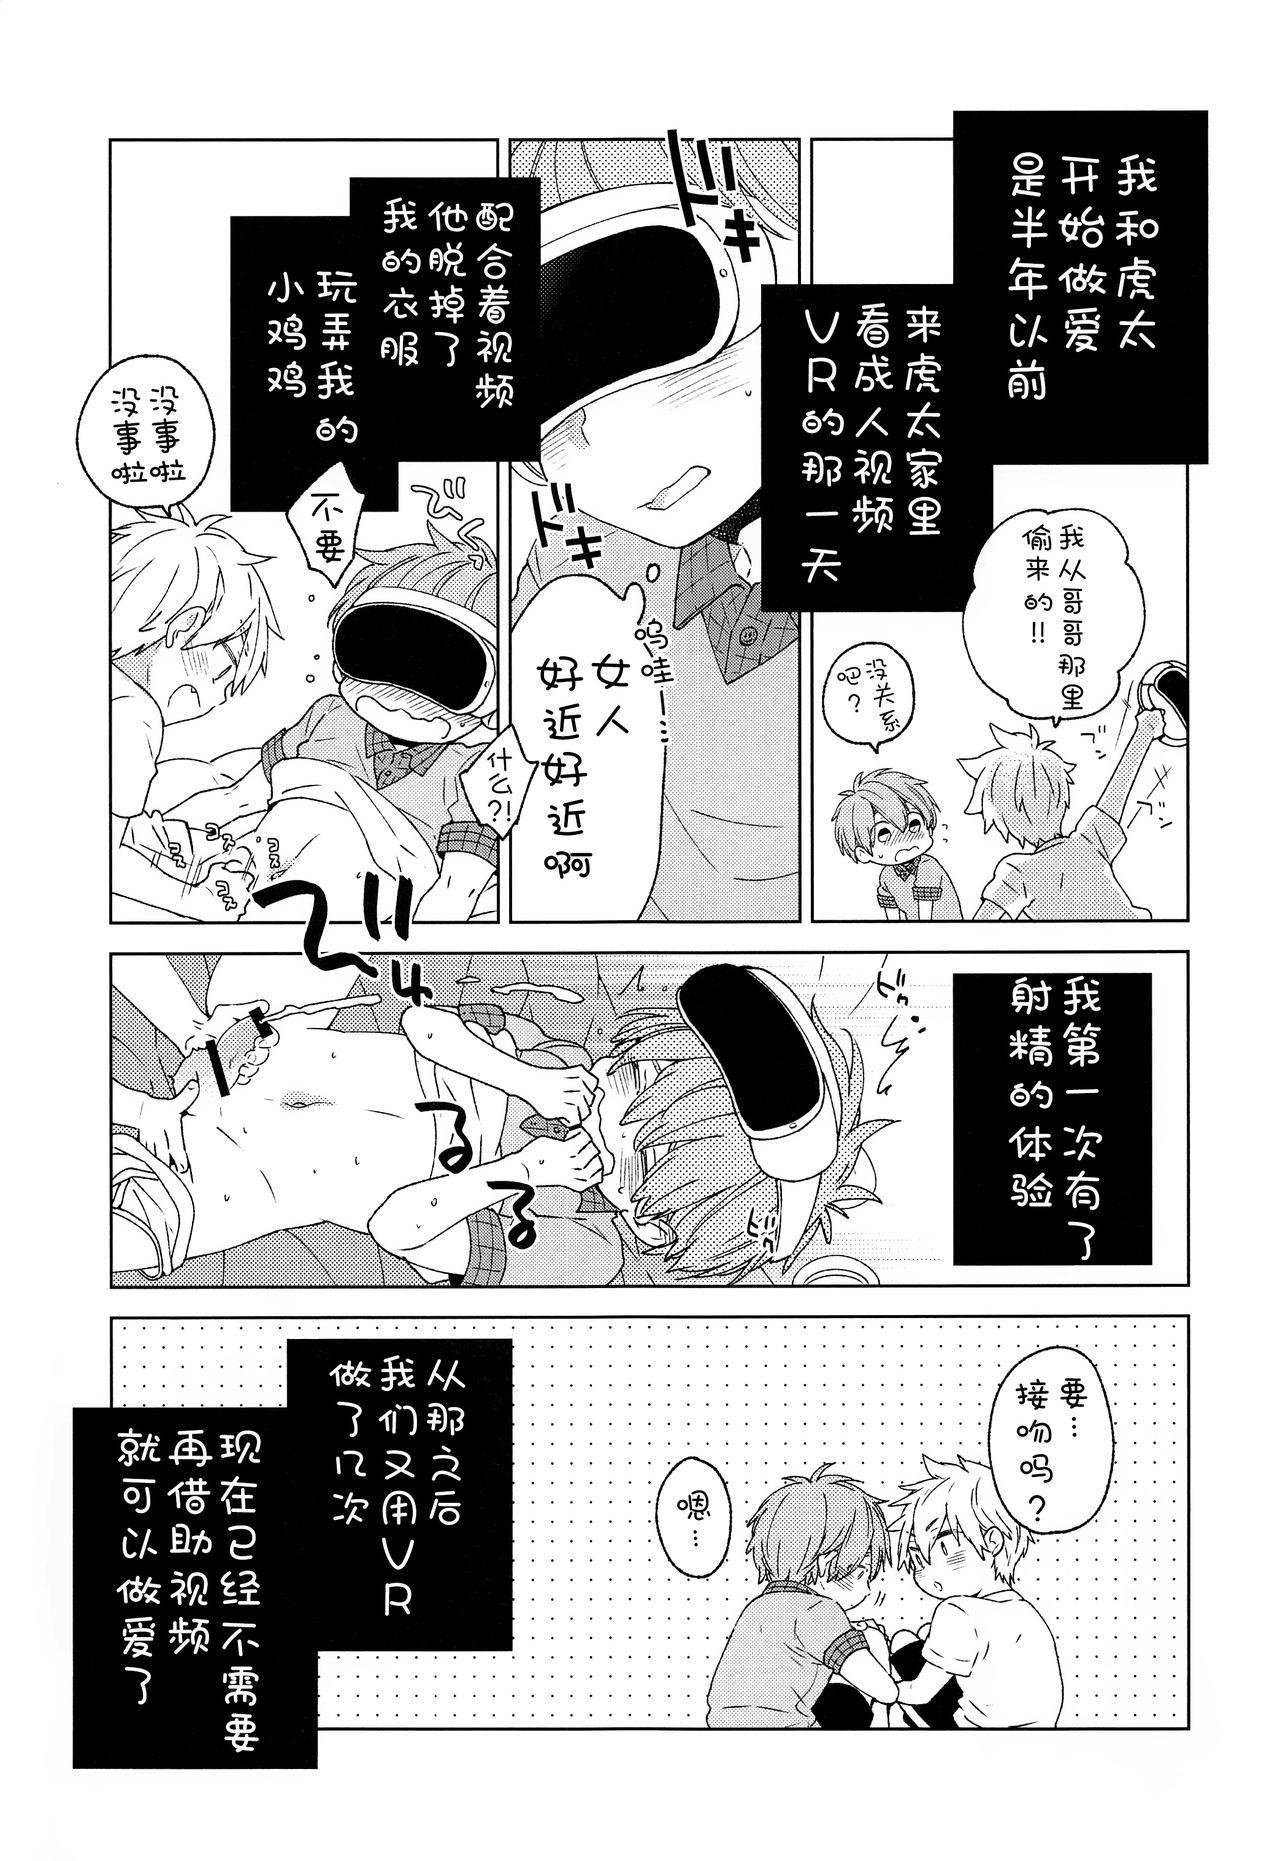 Big Tomodachi to Suru no wa Warui Koto? - Is it wrong to have sex with my friend? - Original Instagram - Page 4